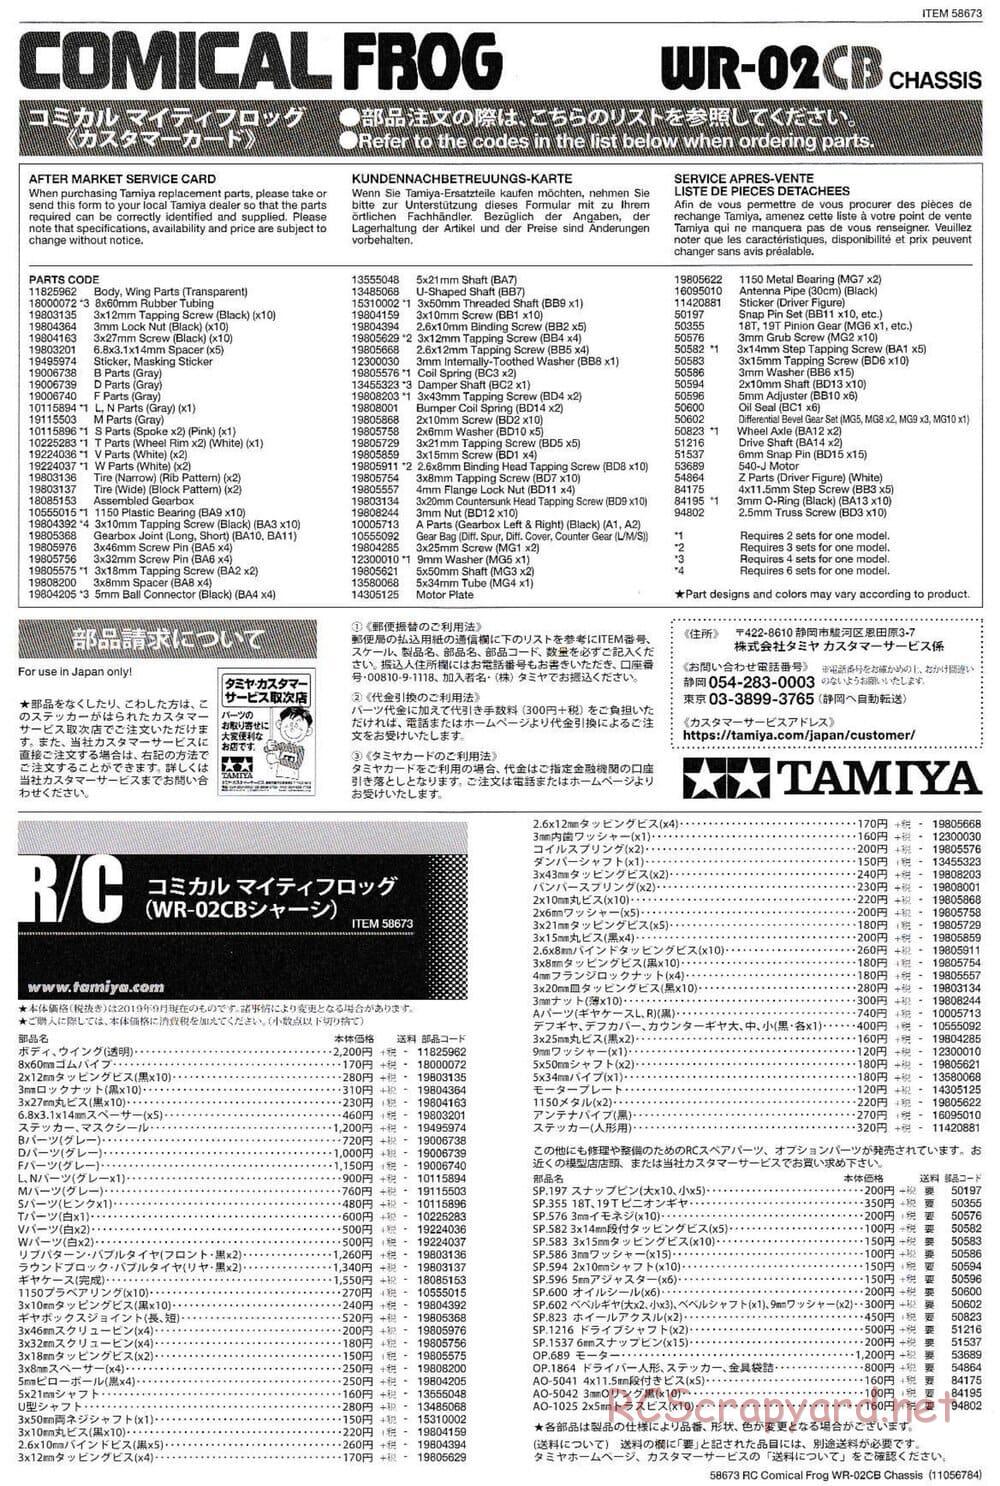 Tamiya - Comical Frog - WR-02CB Chassis - Body Manual - Page 8